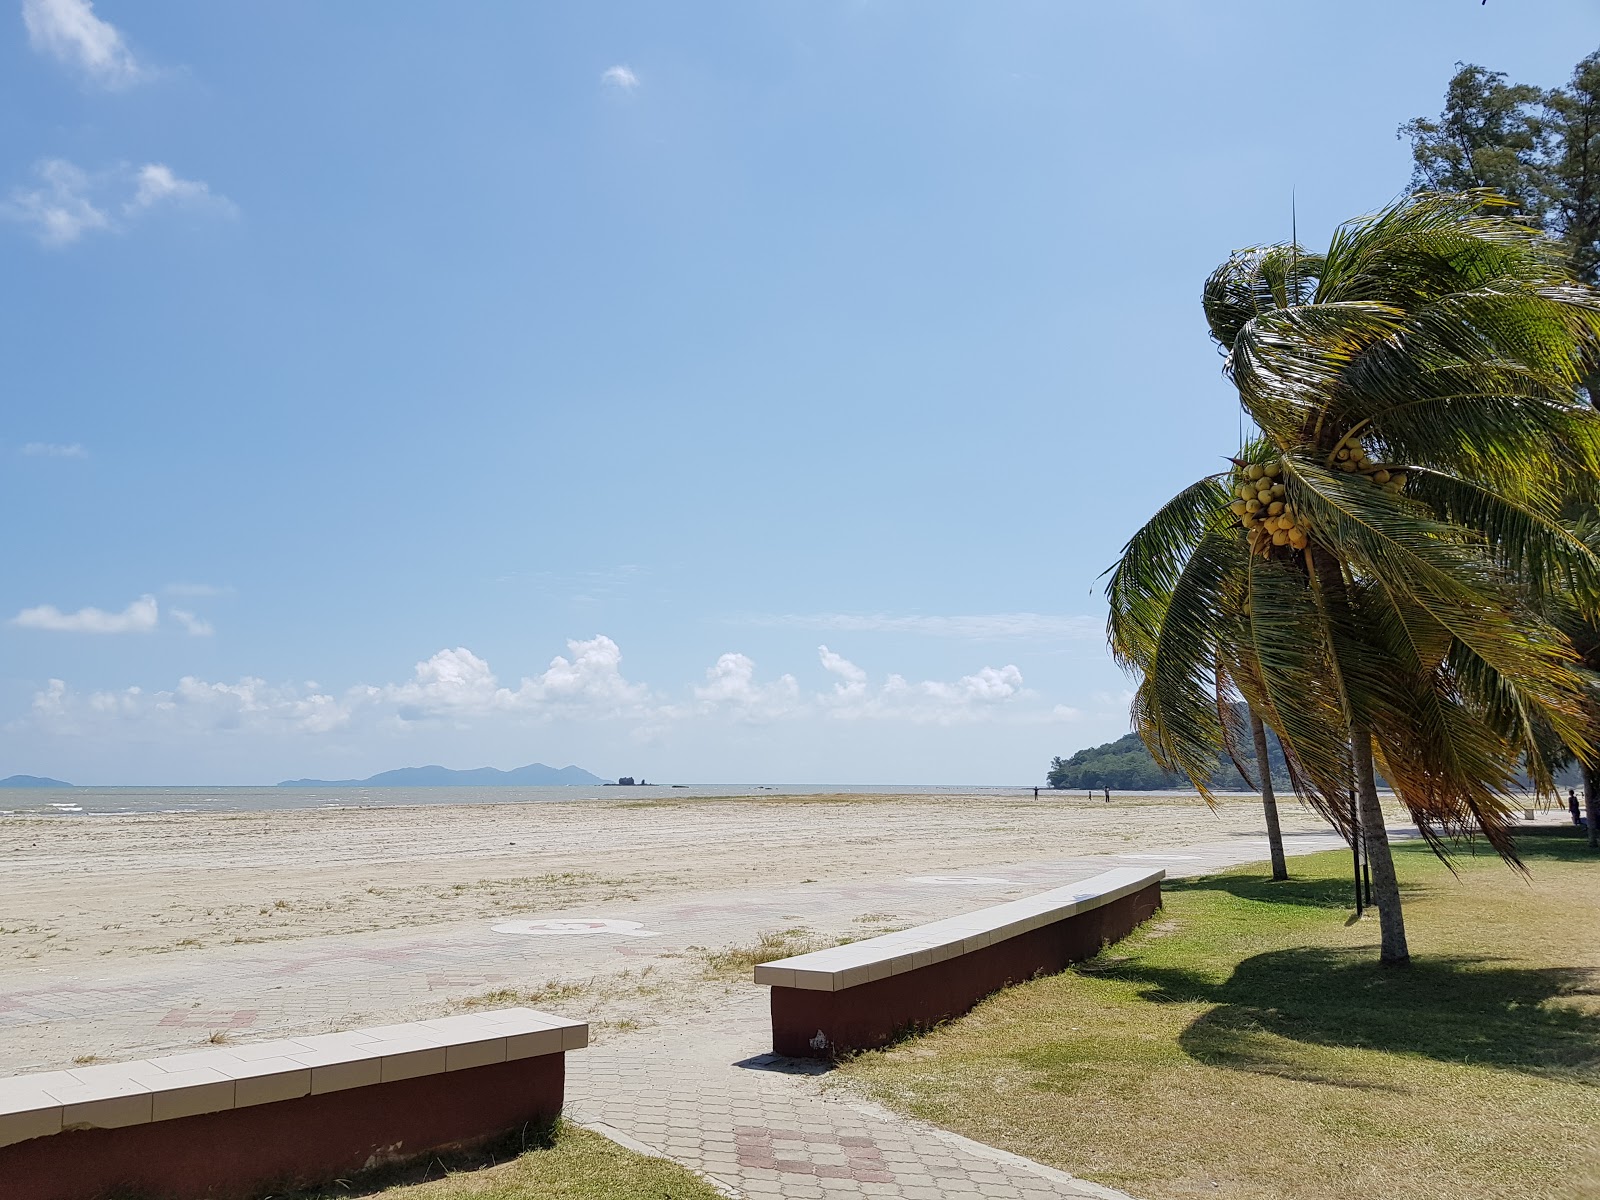 Foto av Bandar Mersing Beach med grå sand yta